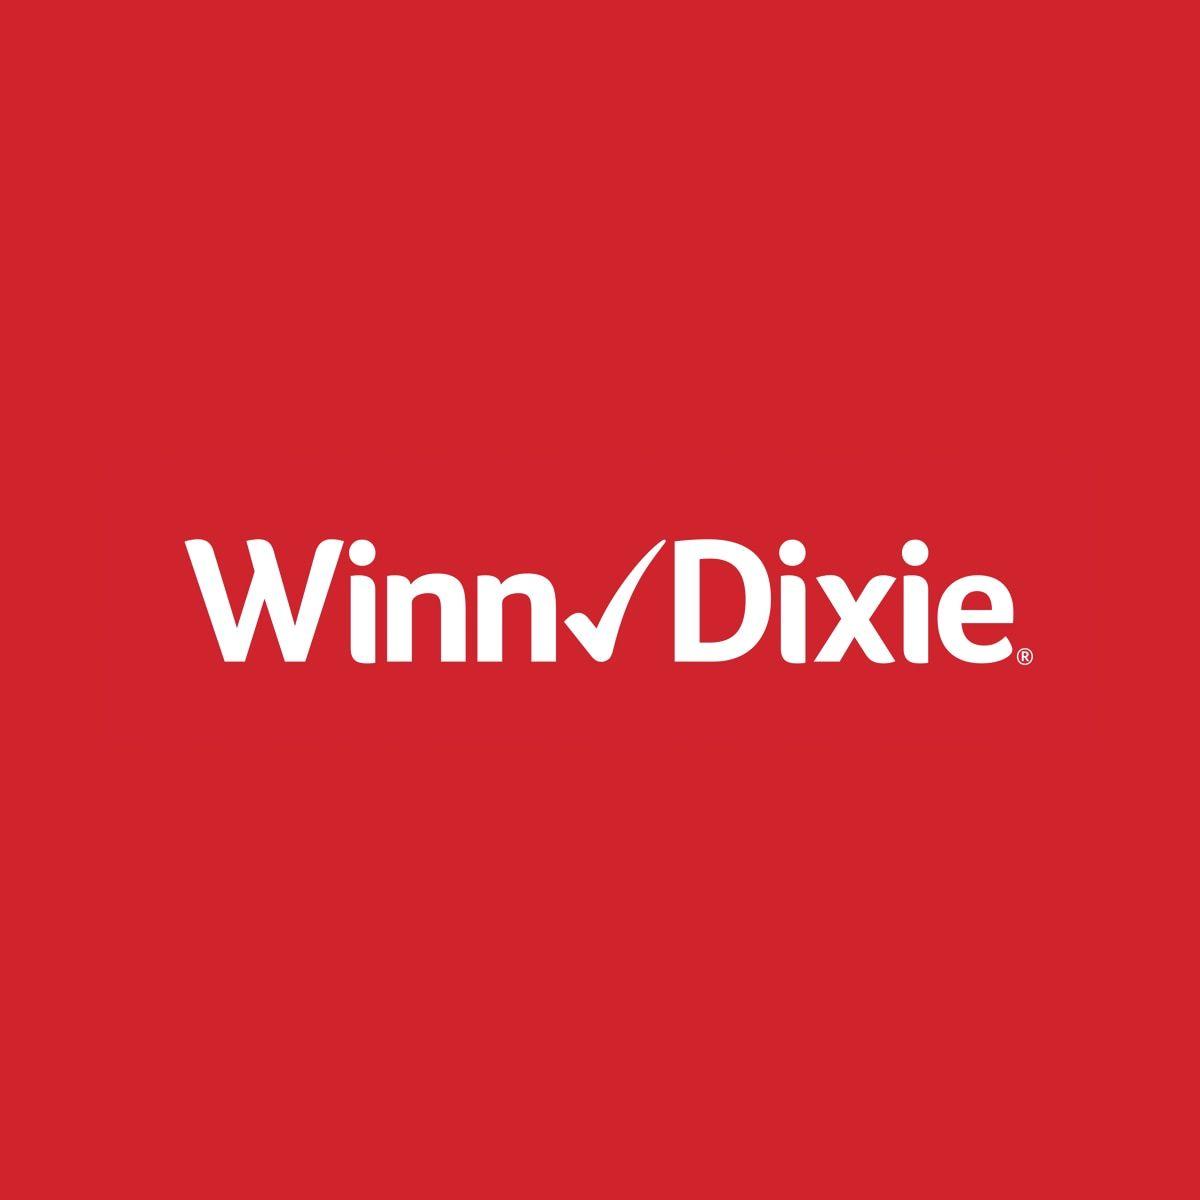 Dixie Logo - Winn-Dixie | Serving the Southeast Since 1925